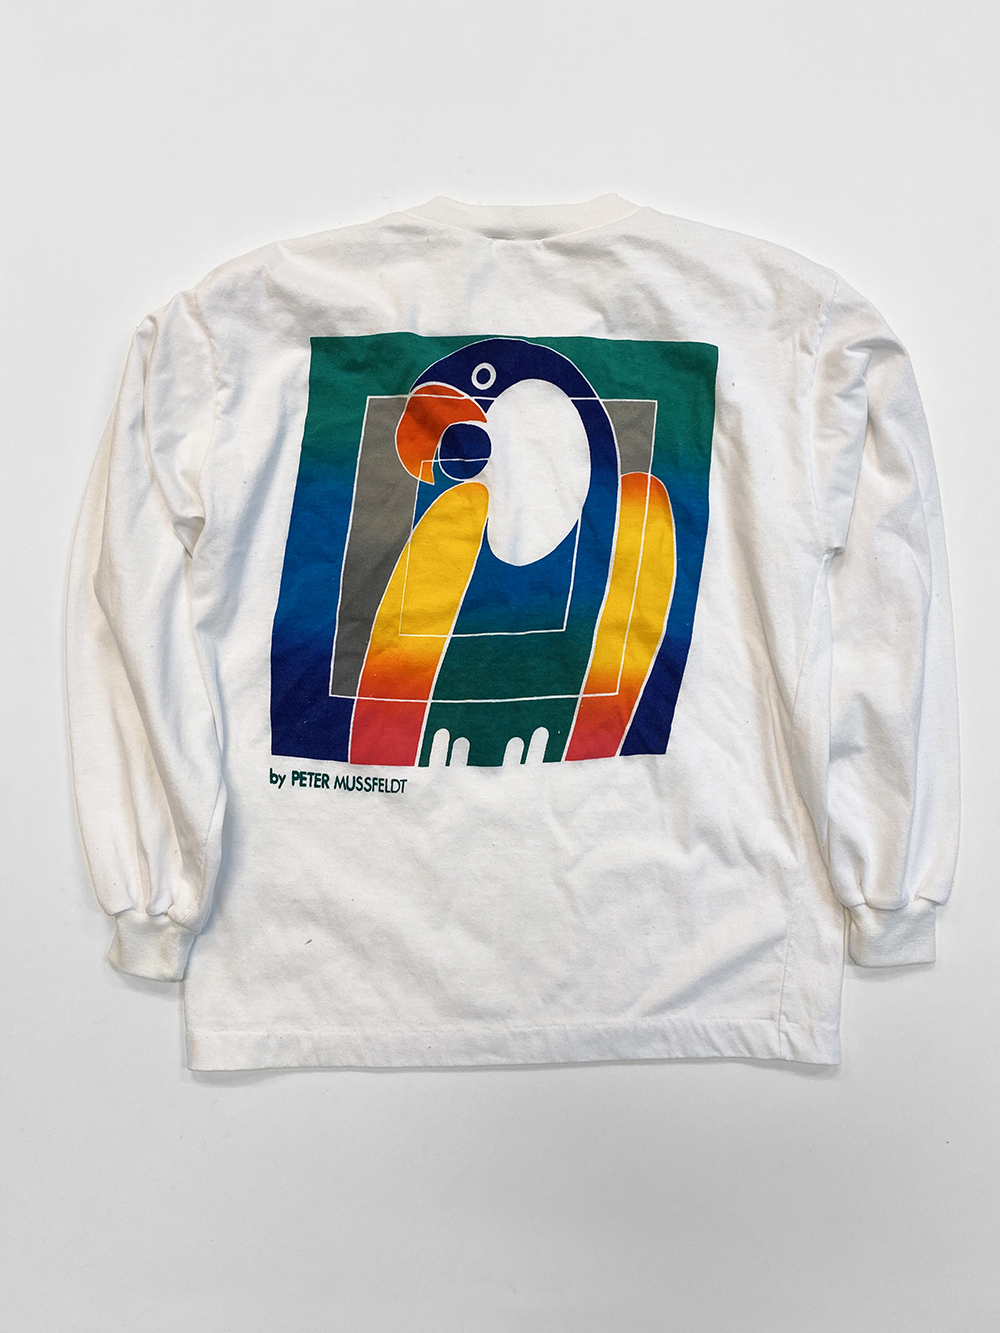 Peter Mussfeldt Design Cozemel 1991 Longsleeve Tee Shirt Medium Kyc Vintage